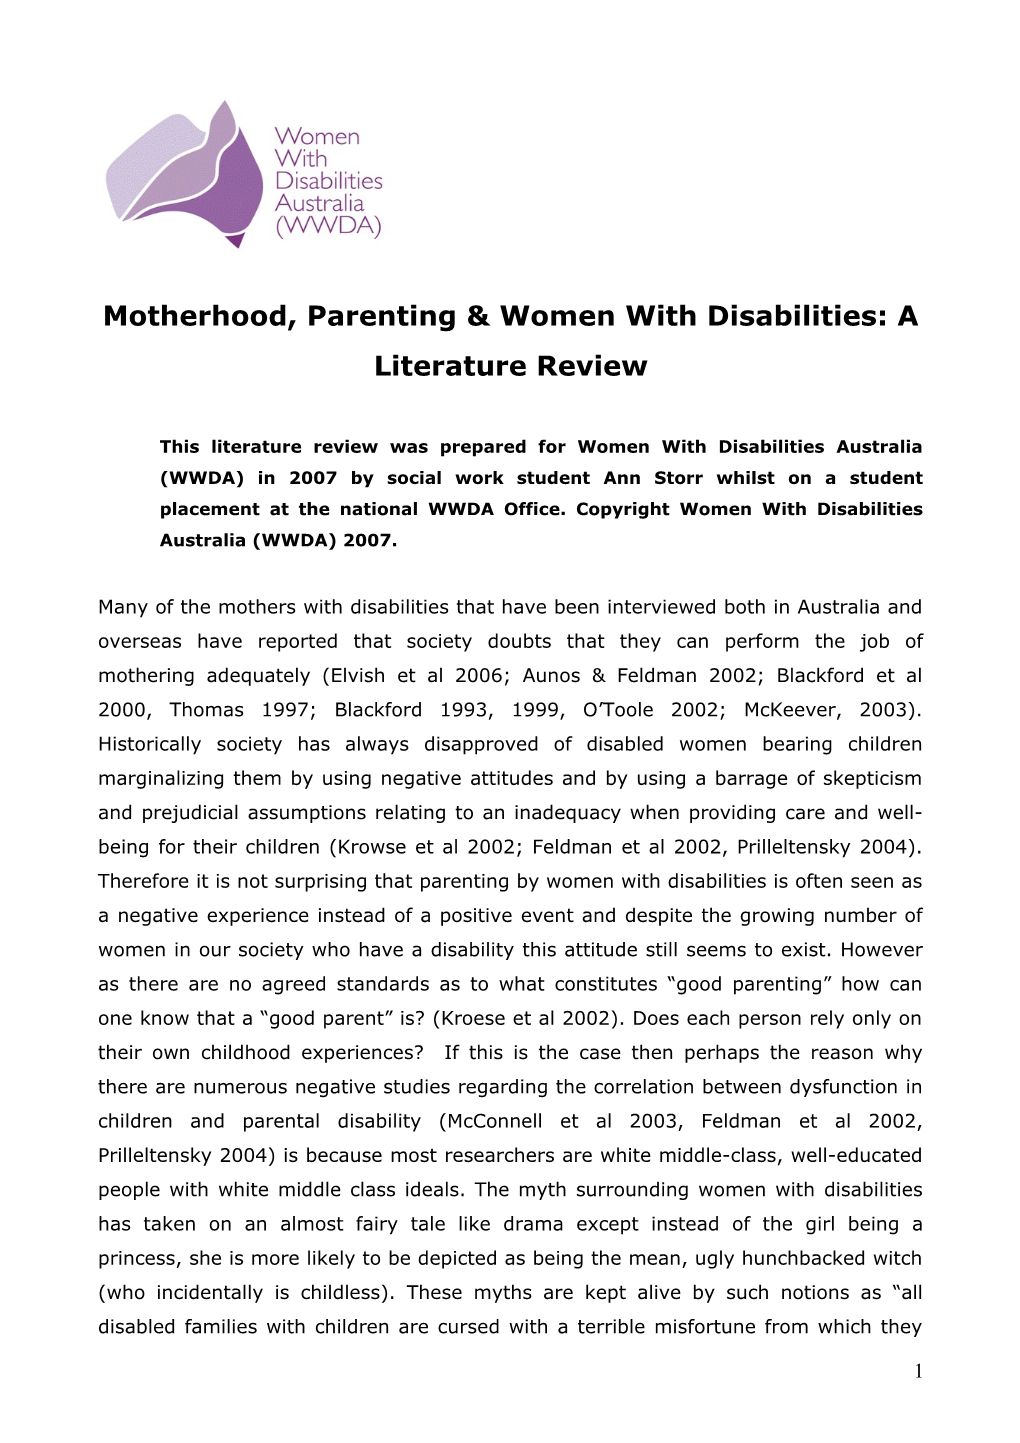 Motherhood, Parenting Women with Disabilities: a Literature Review